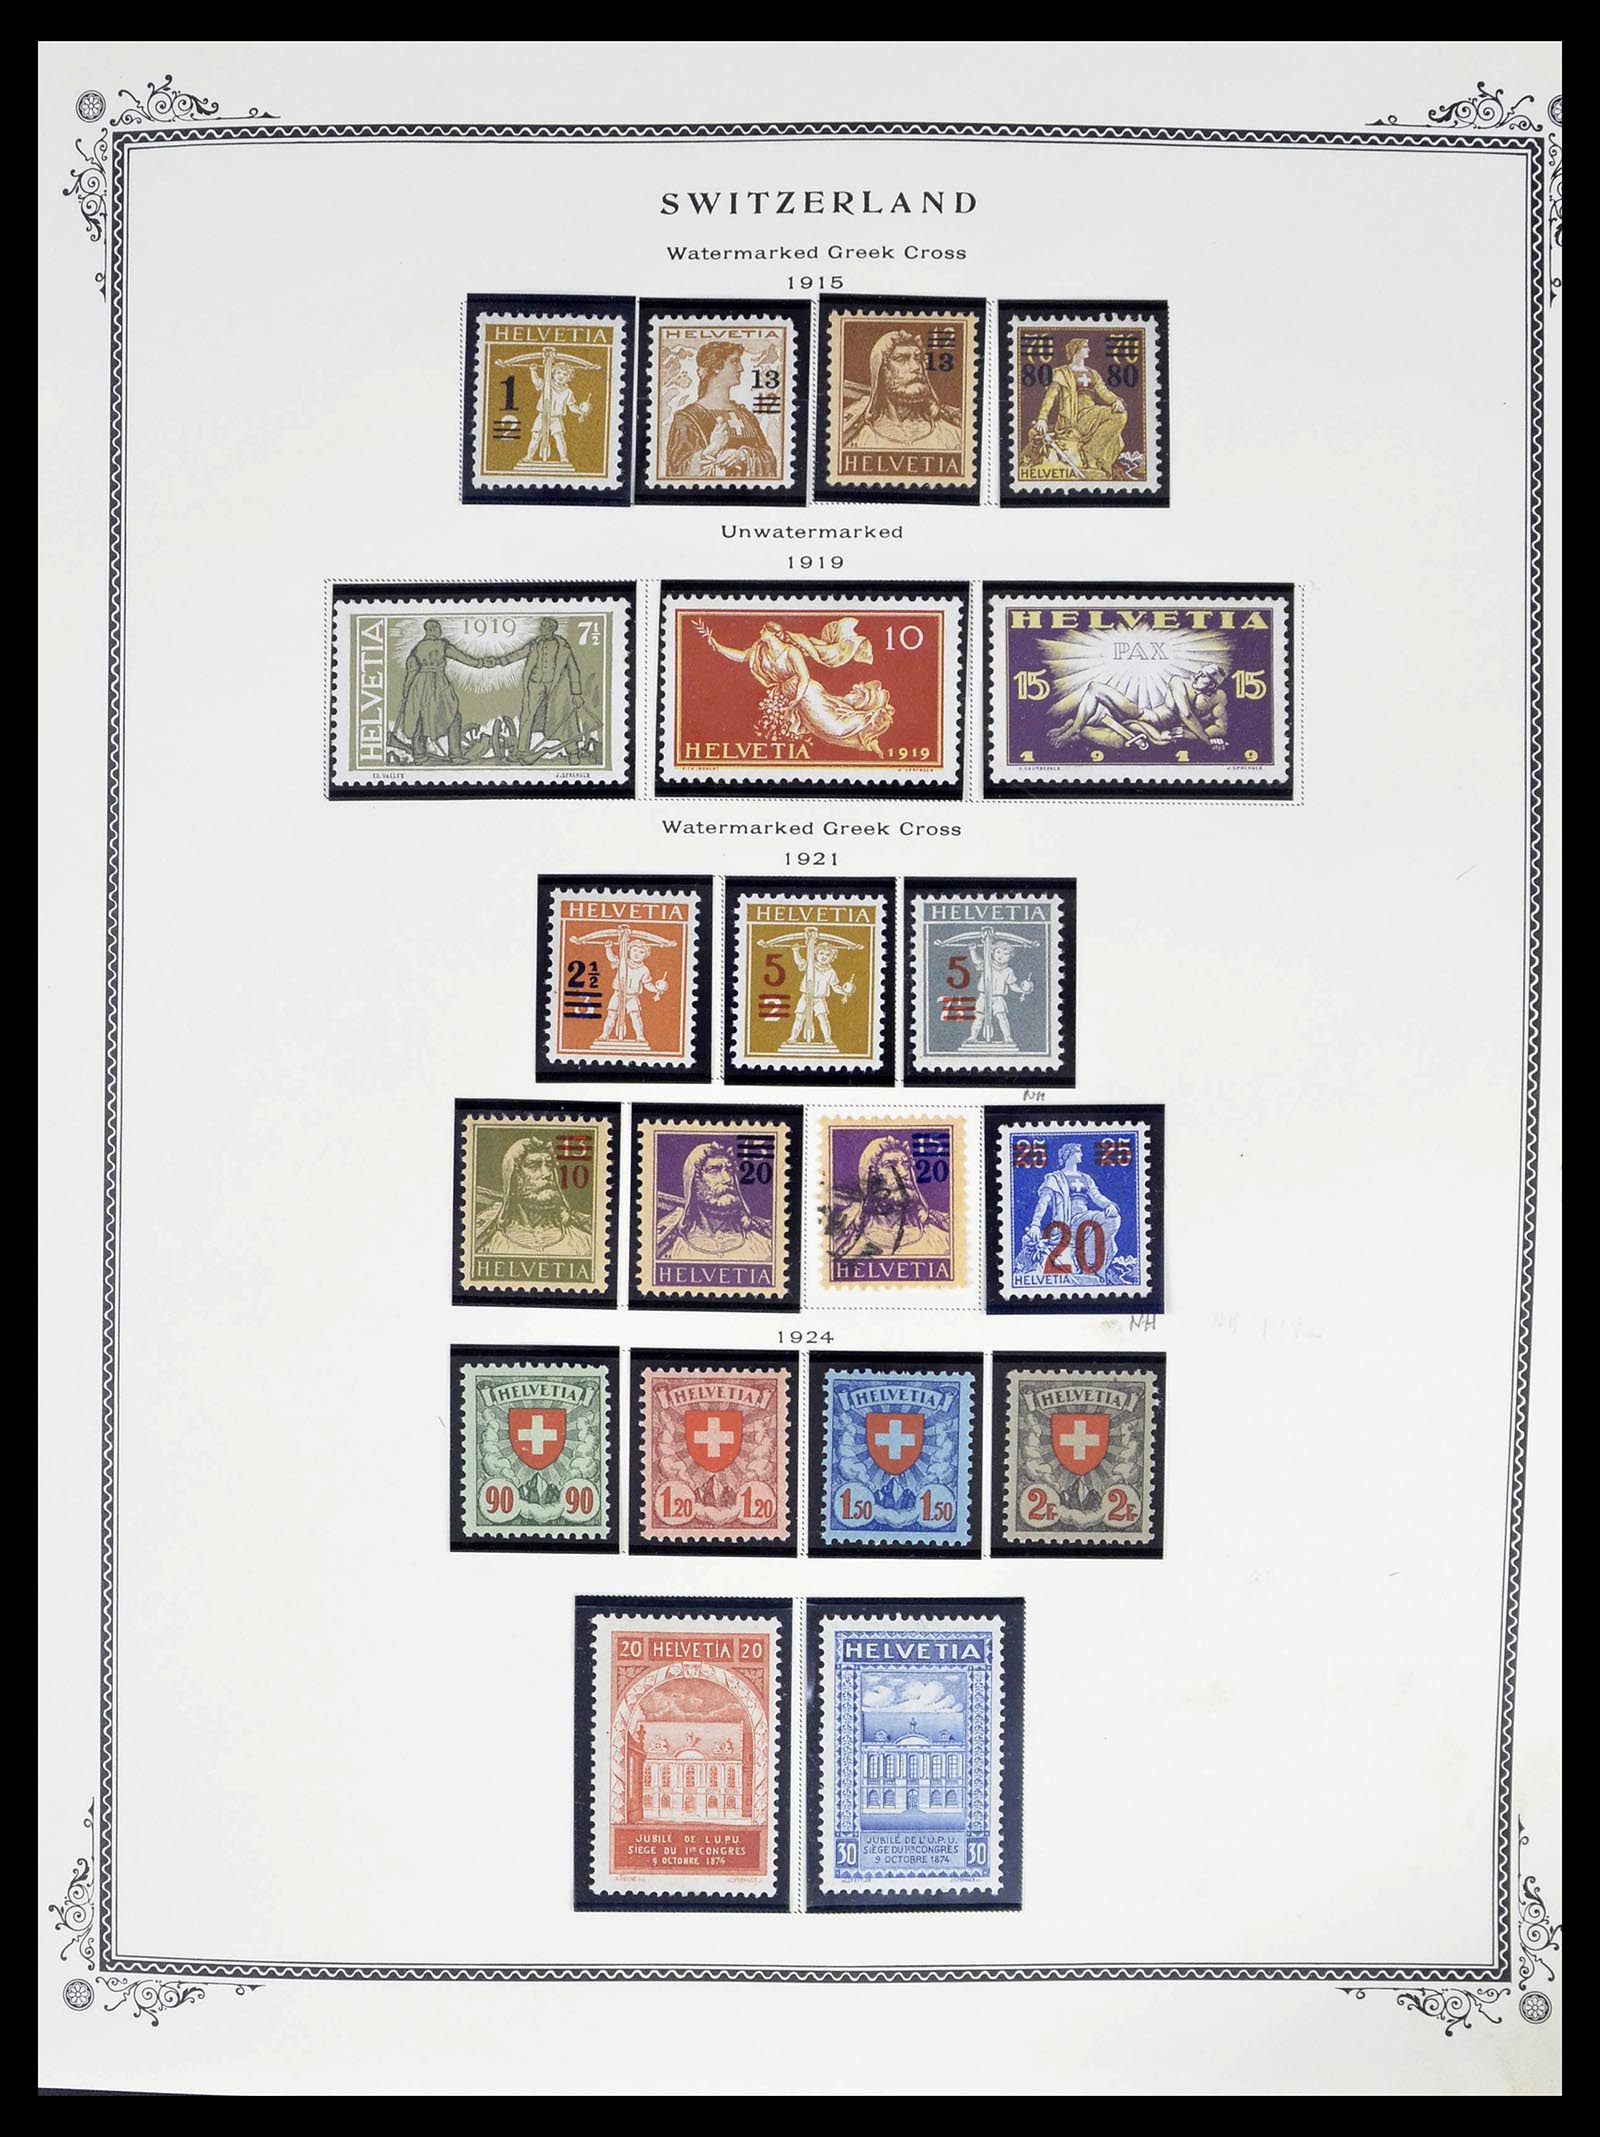 39178 0018 - Stamp collection 39178 Switzerland 1850-1989.